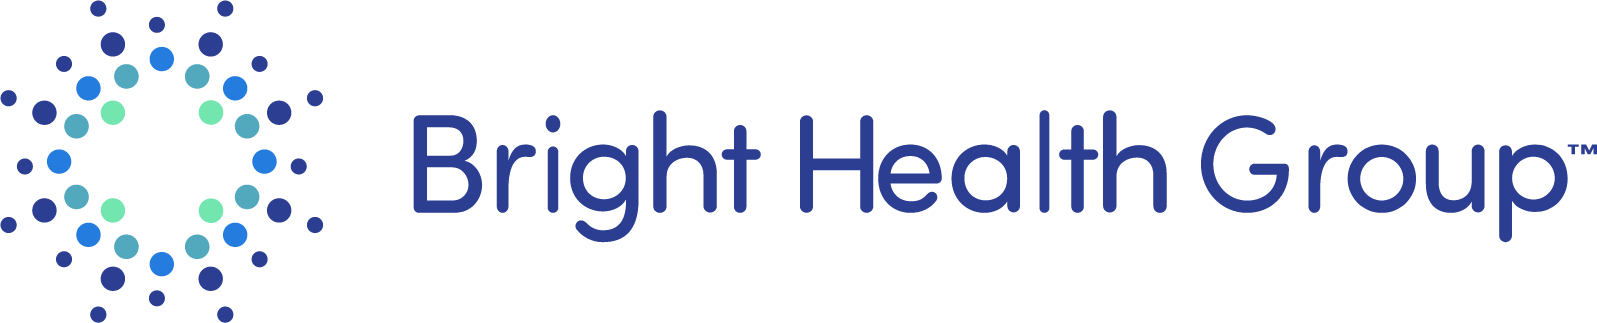 Bright Health logo large (transparent PNG)